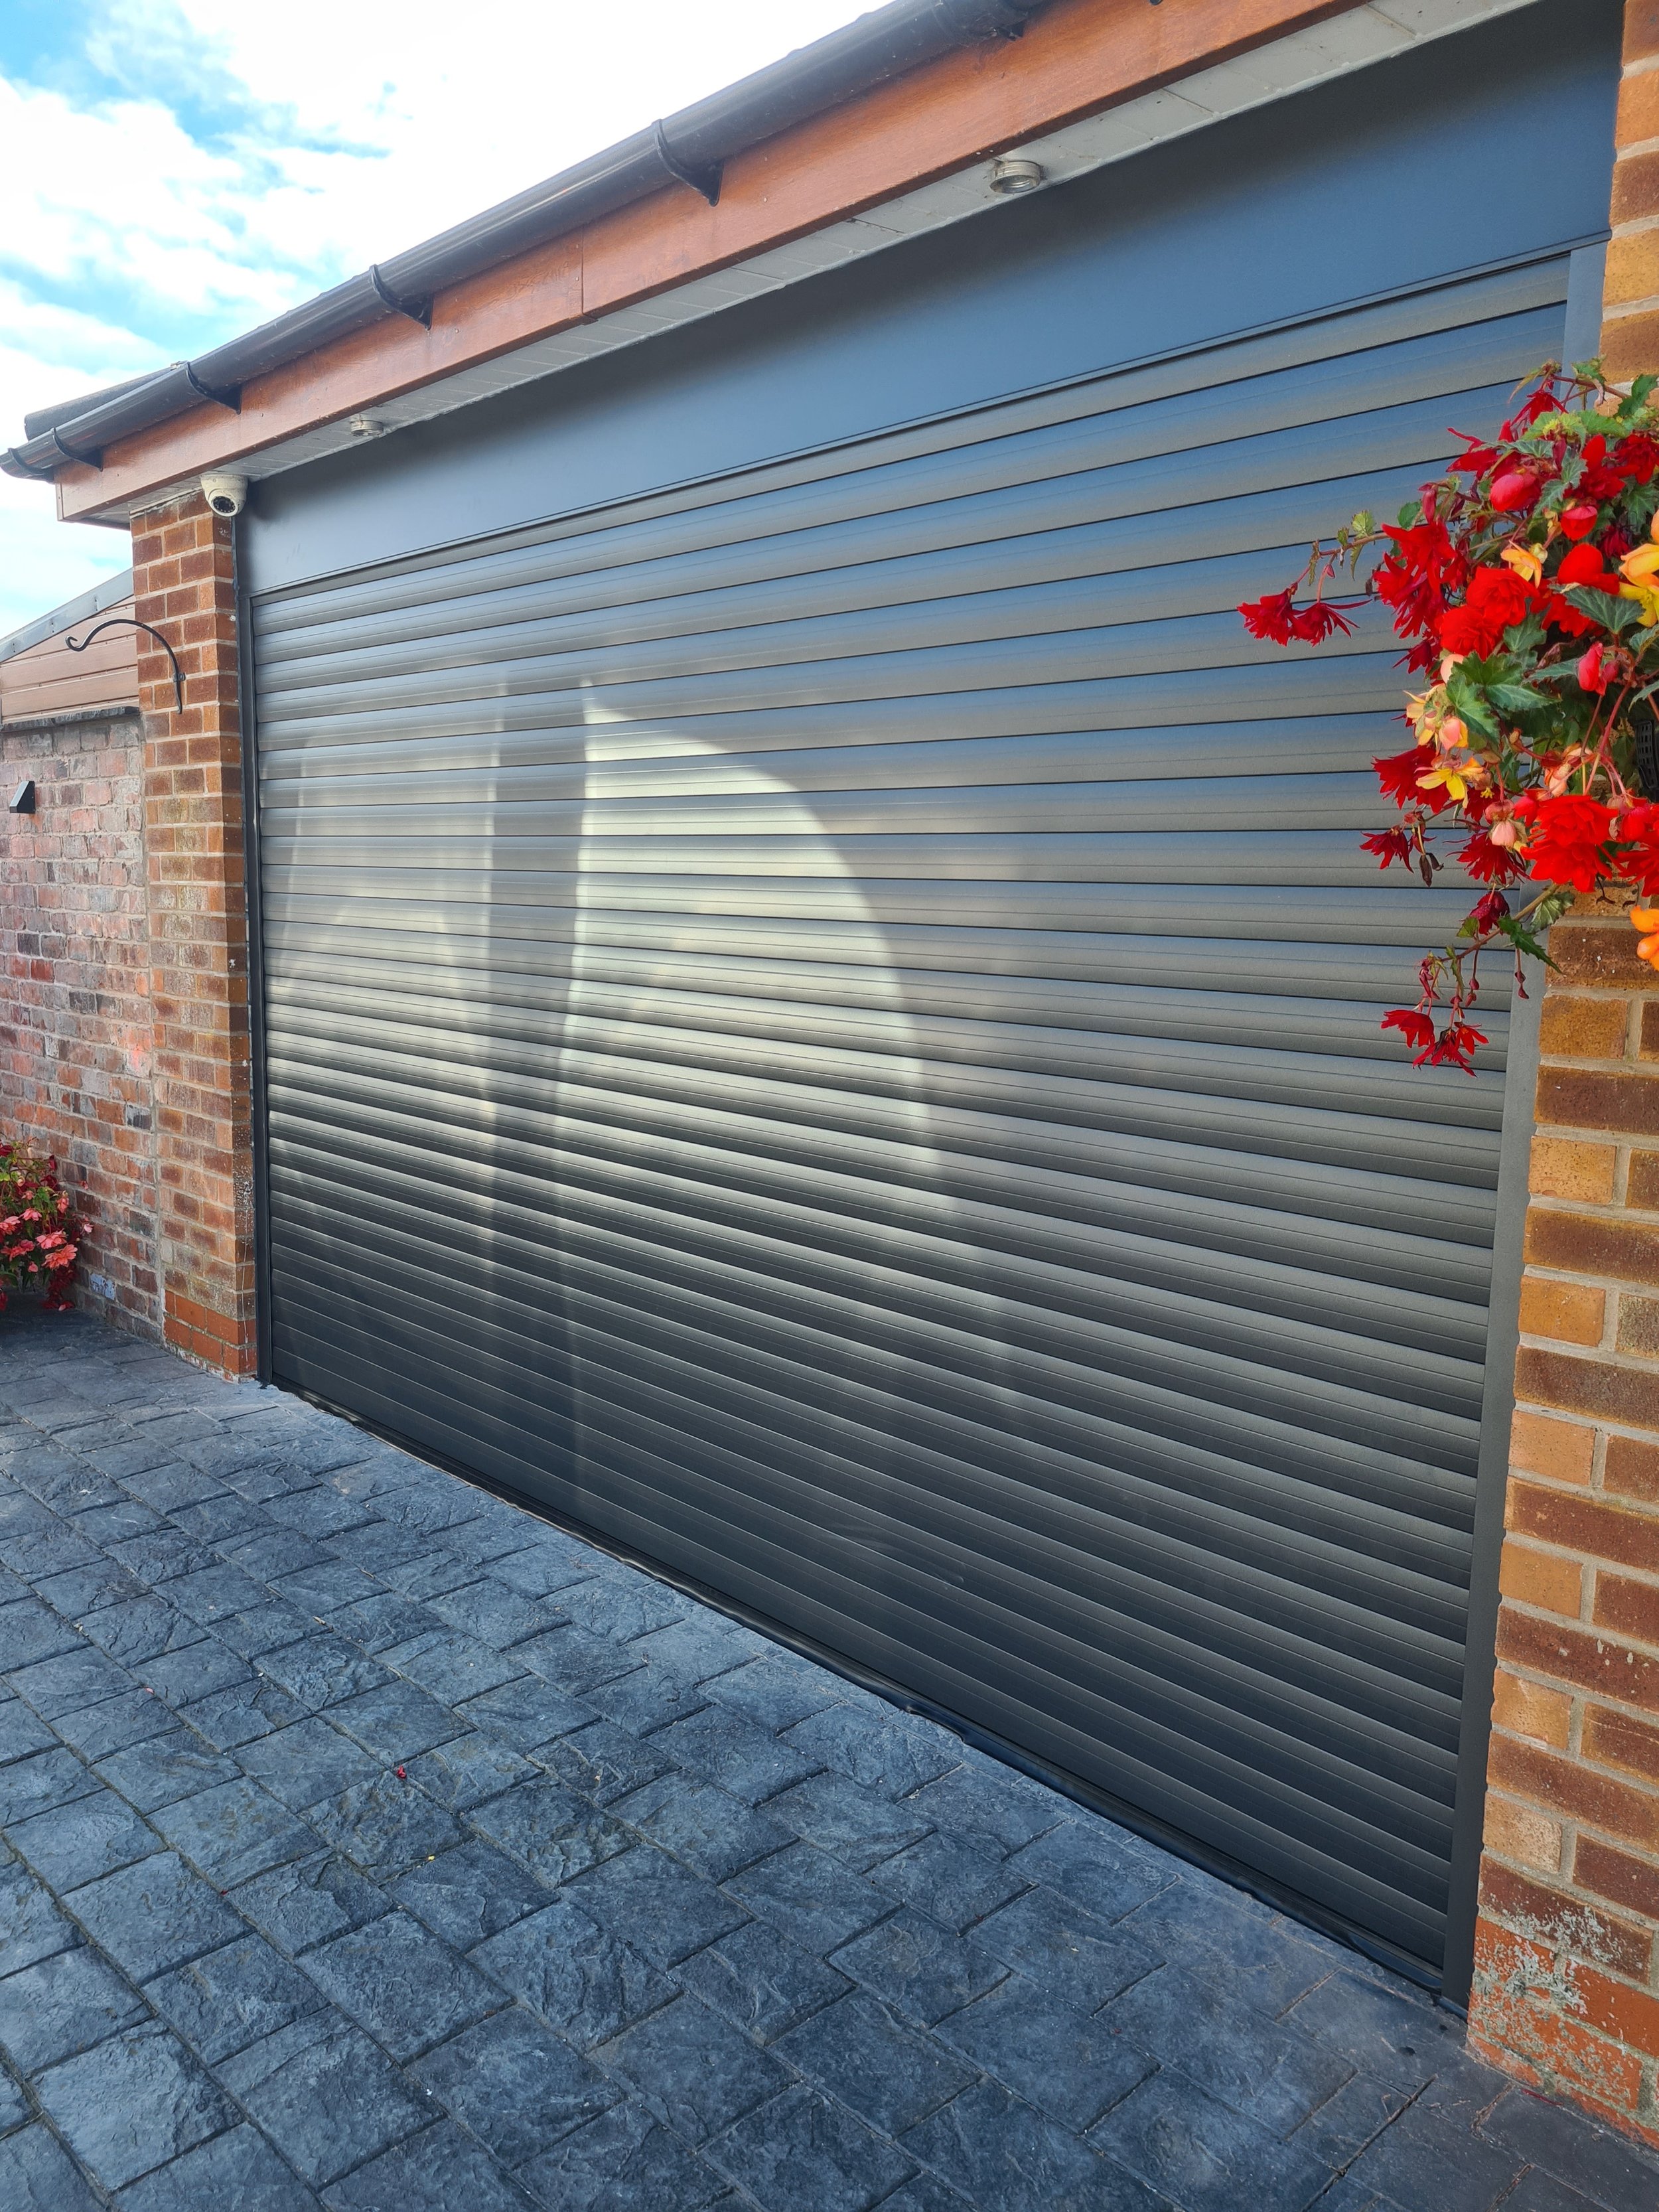 Uk Doors Midlands Classic 77m fully insulated roller garage door in Textured graphite W/ matching frame